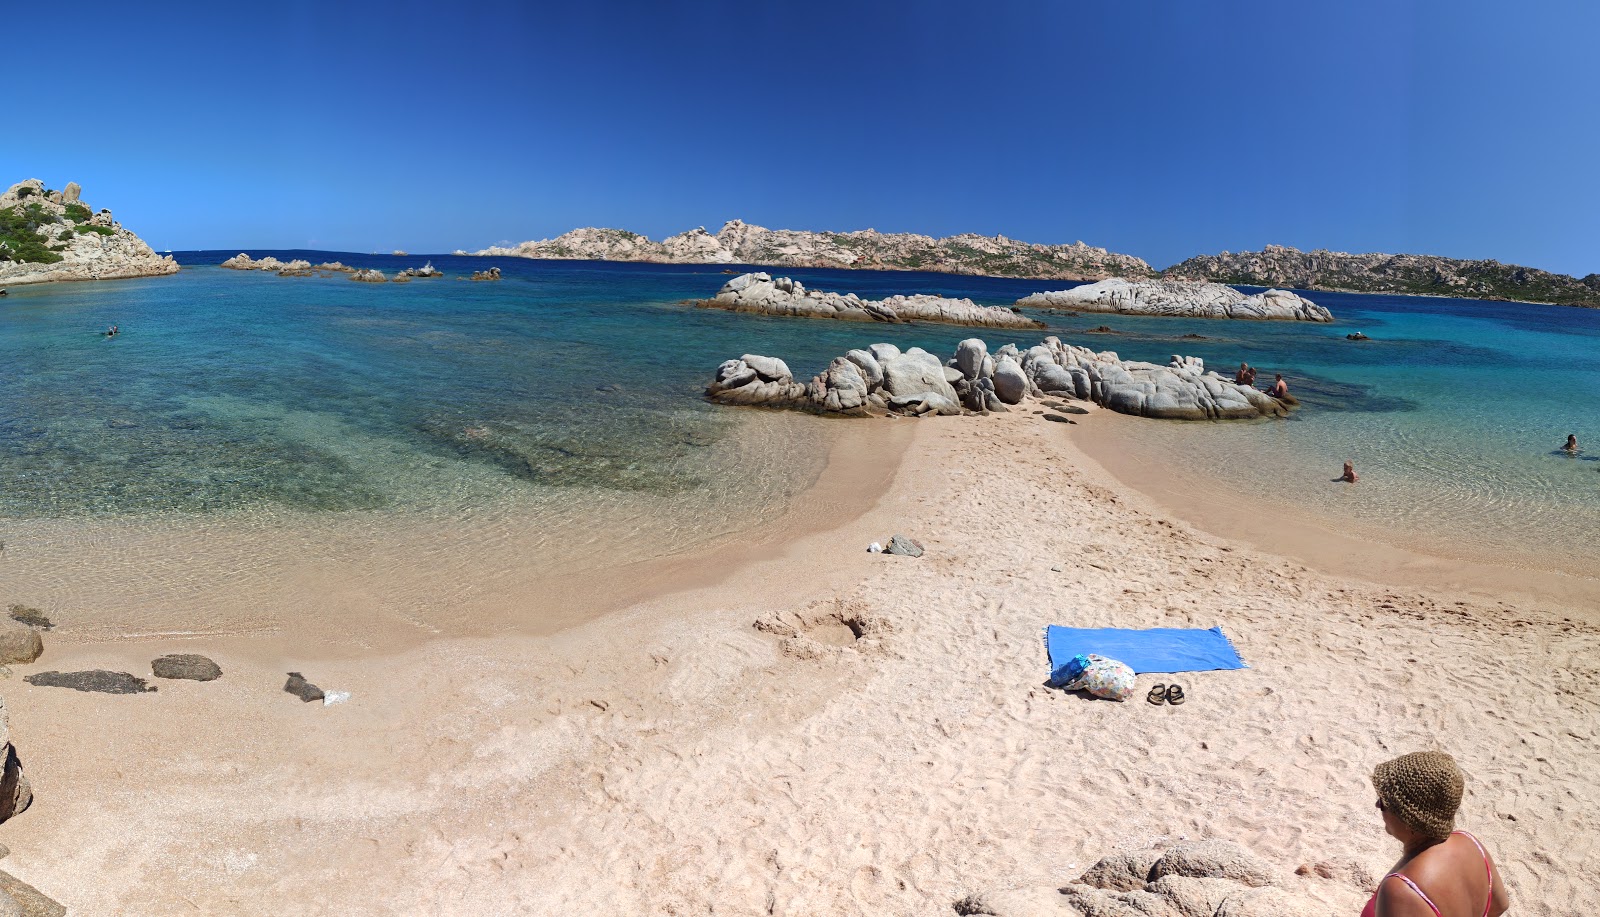 Foto av Spiaggia dello Strangolato med turkos rent vatten yta